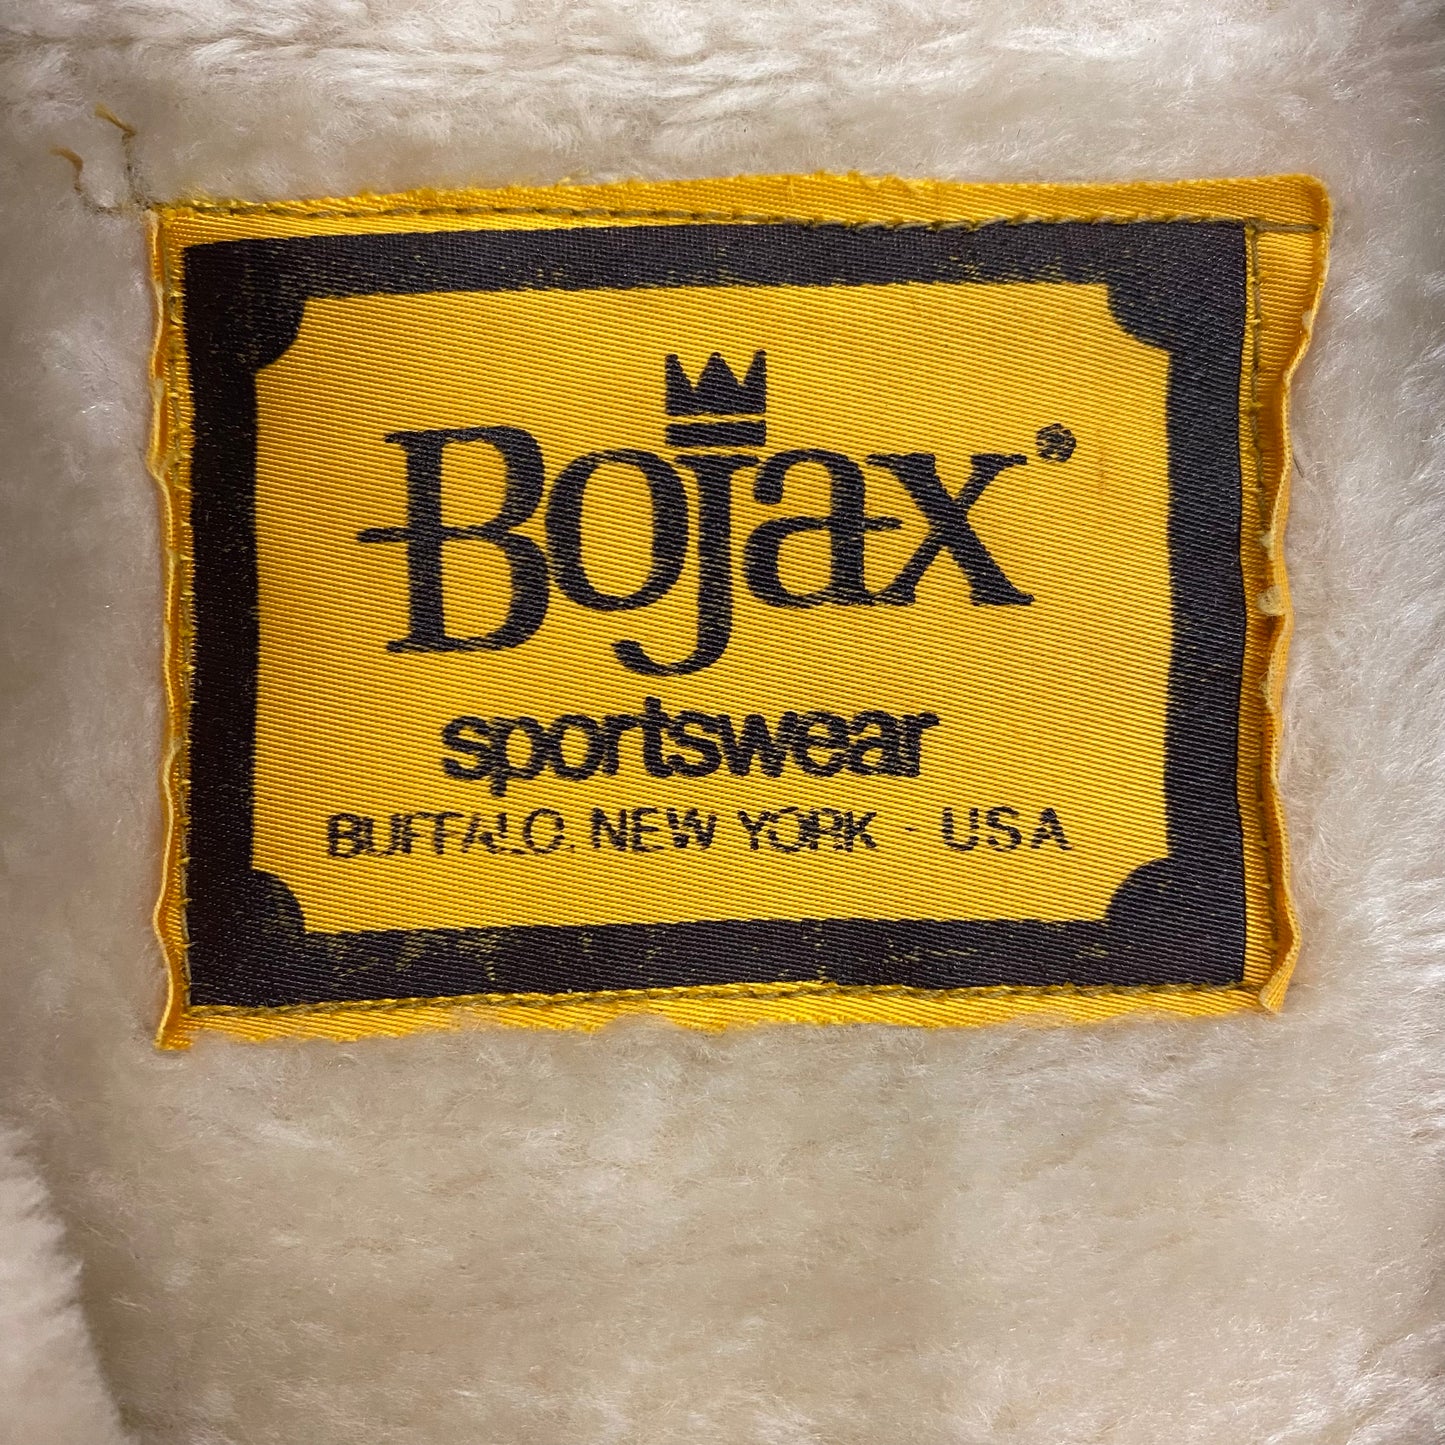 1970s Bojax Sportswear Sherpa Lined Corduroy Jacket - Size Large